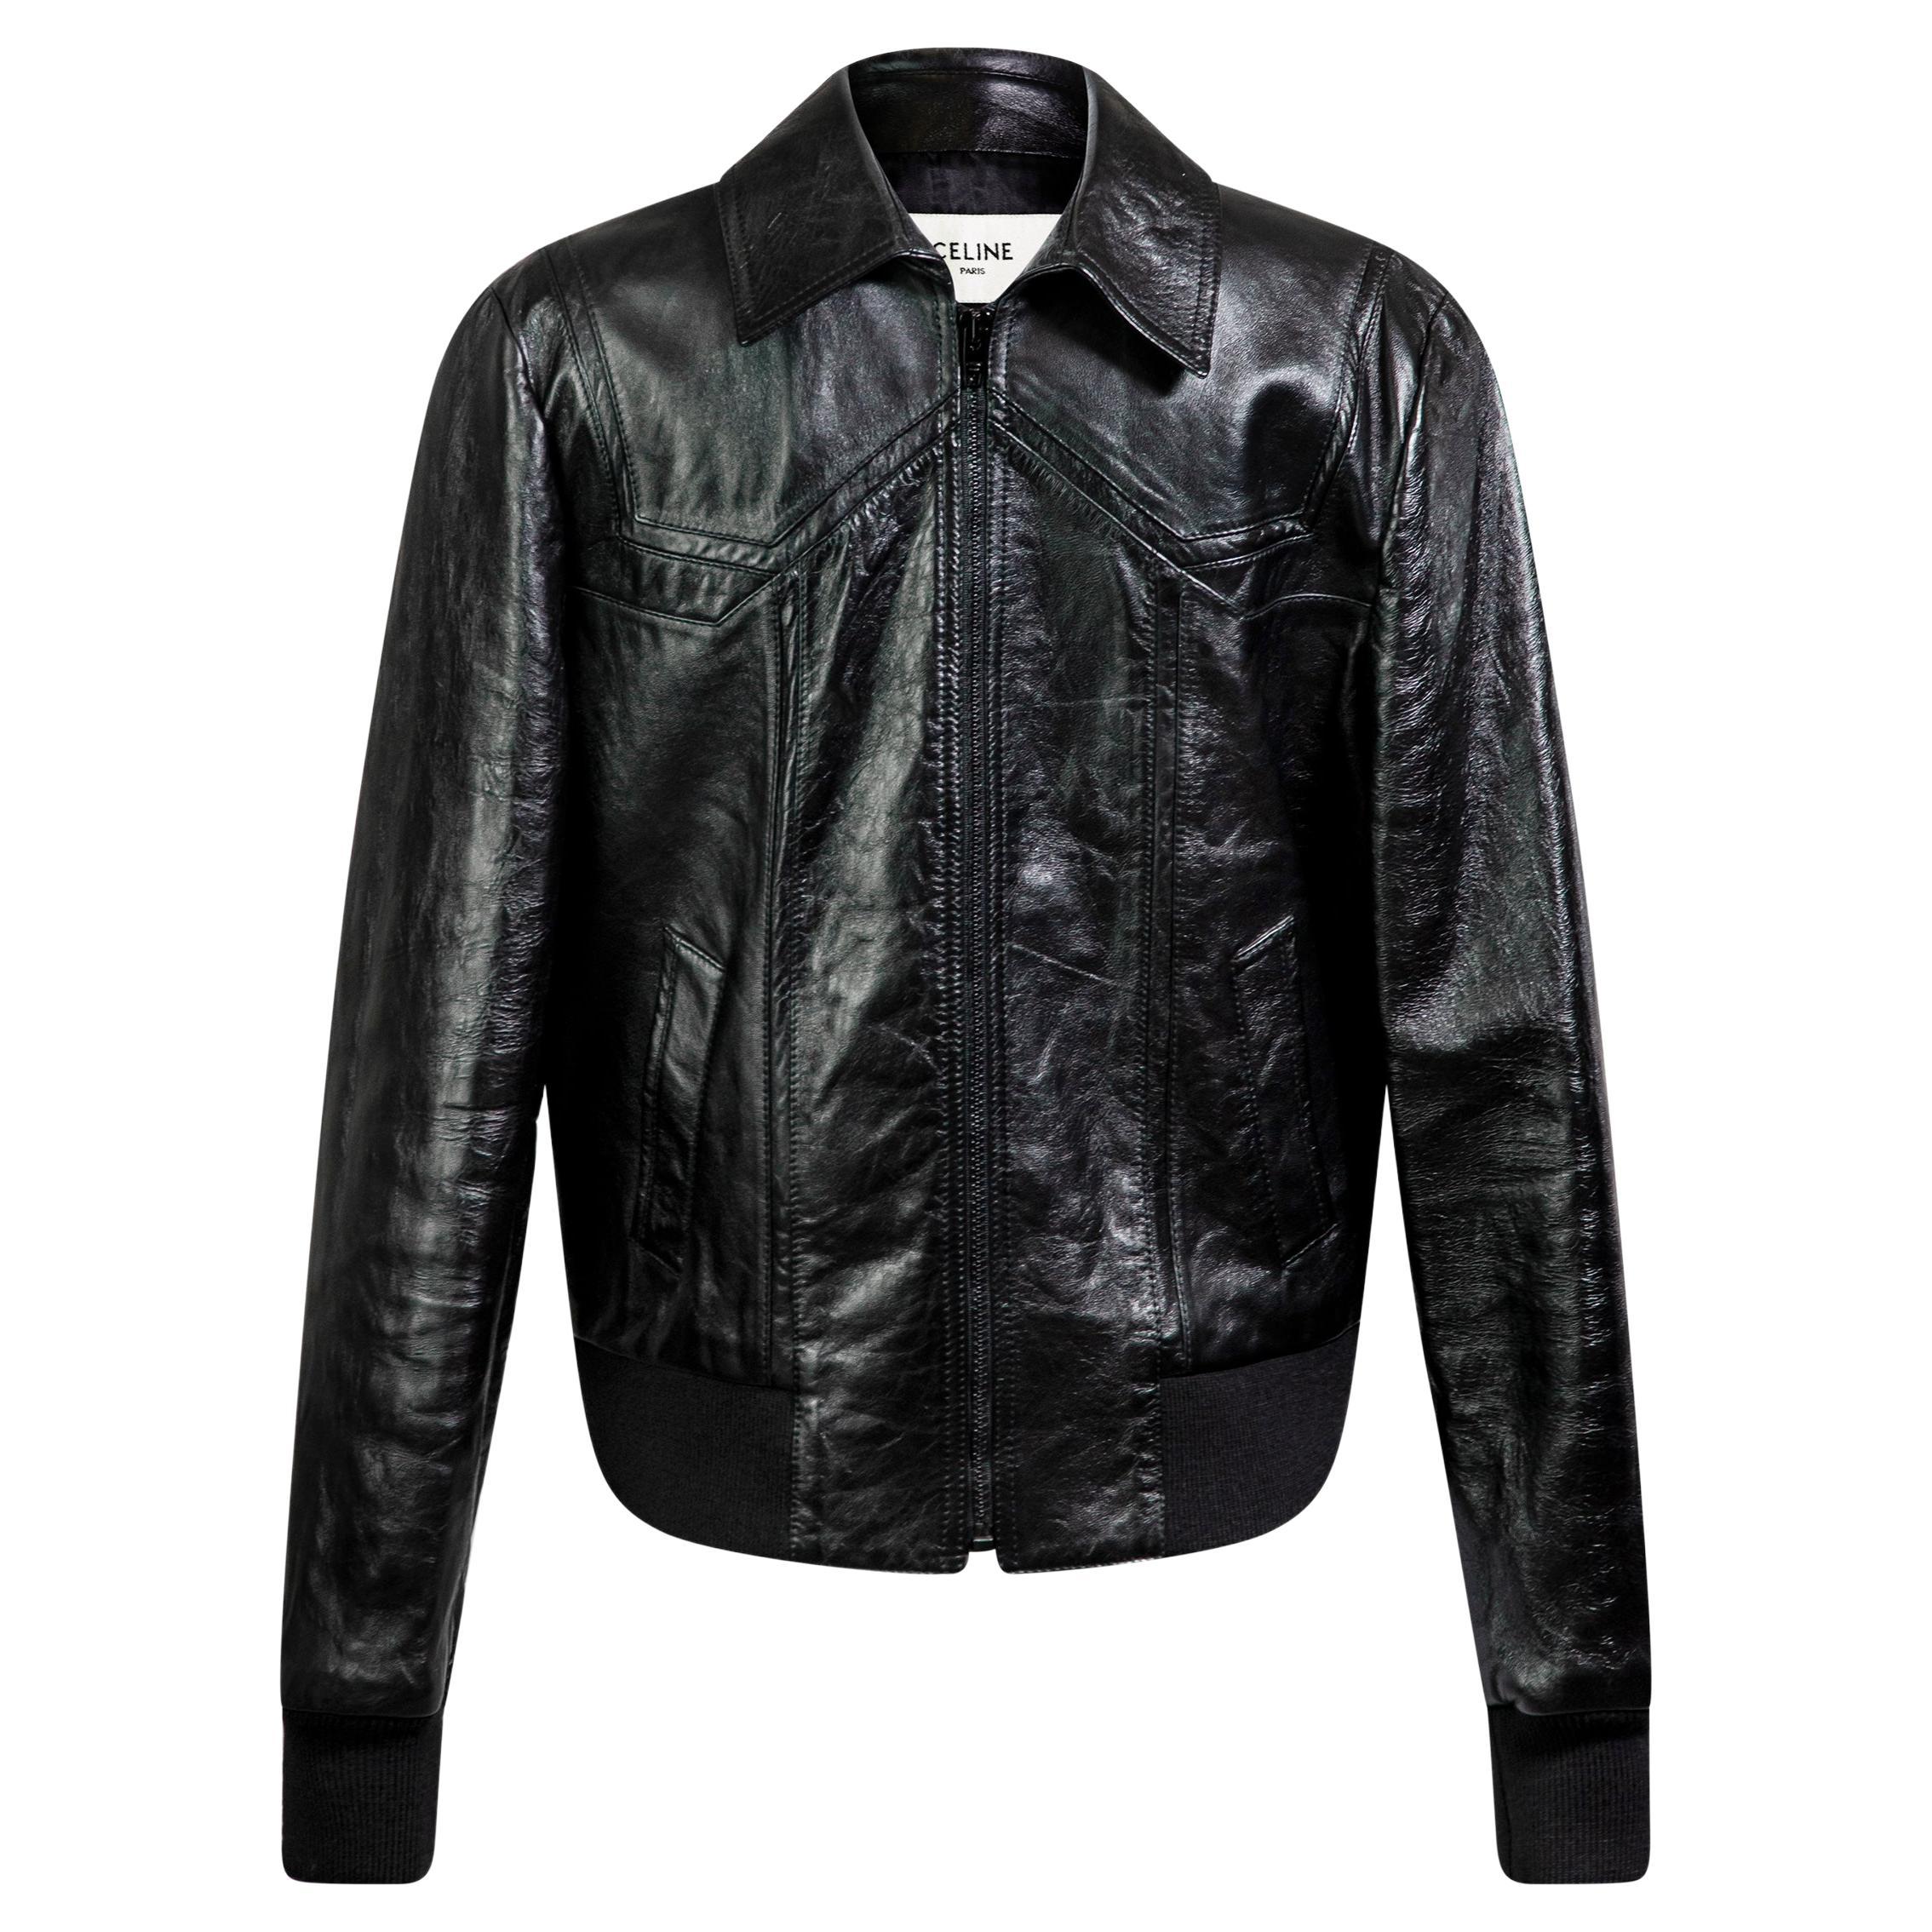 CELINE BY HEDI SLIMANE S/S 2020 Runway Leather Jacket